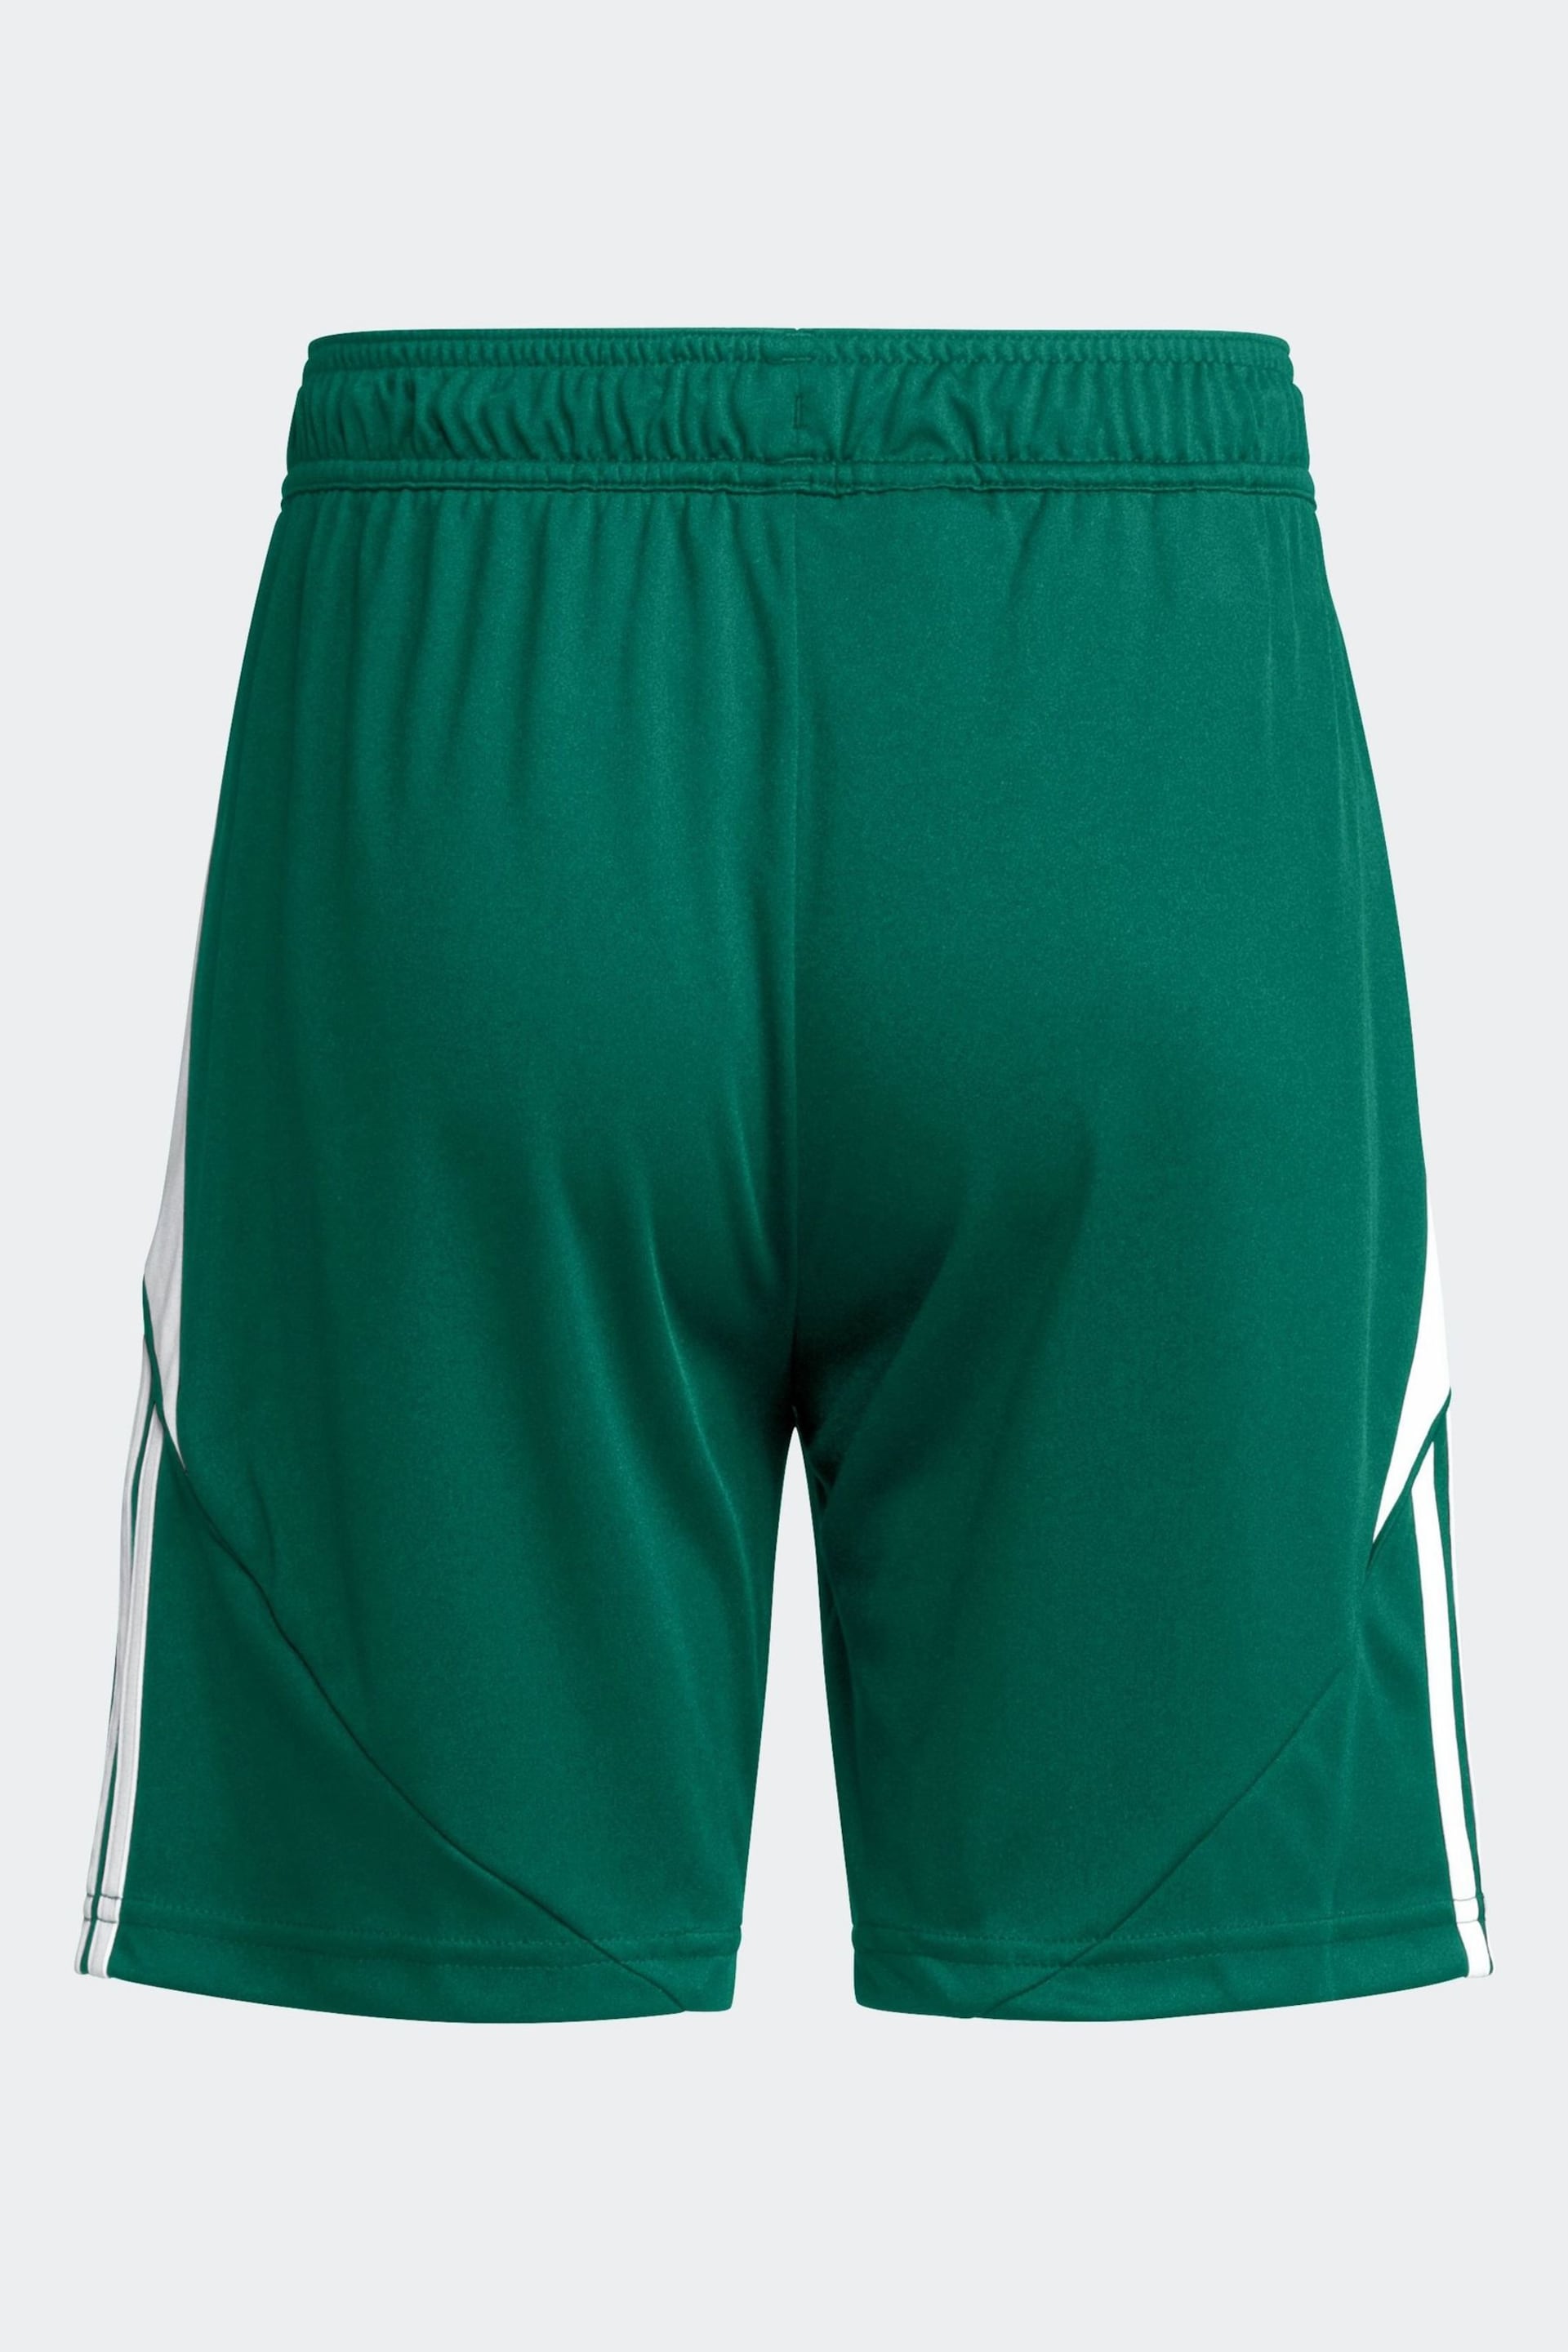 adidas Dark Green Tiro 24 Shorts - Image 2 of 2